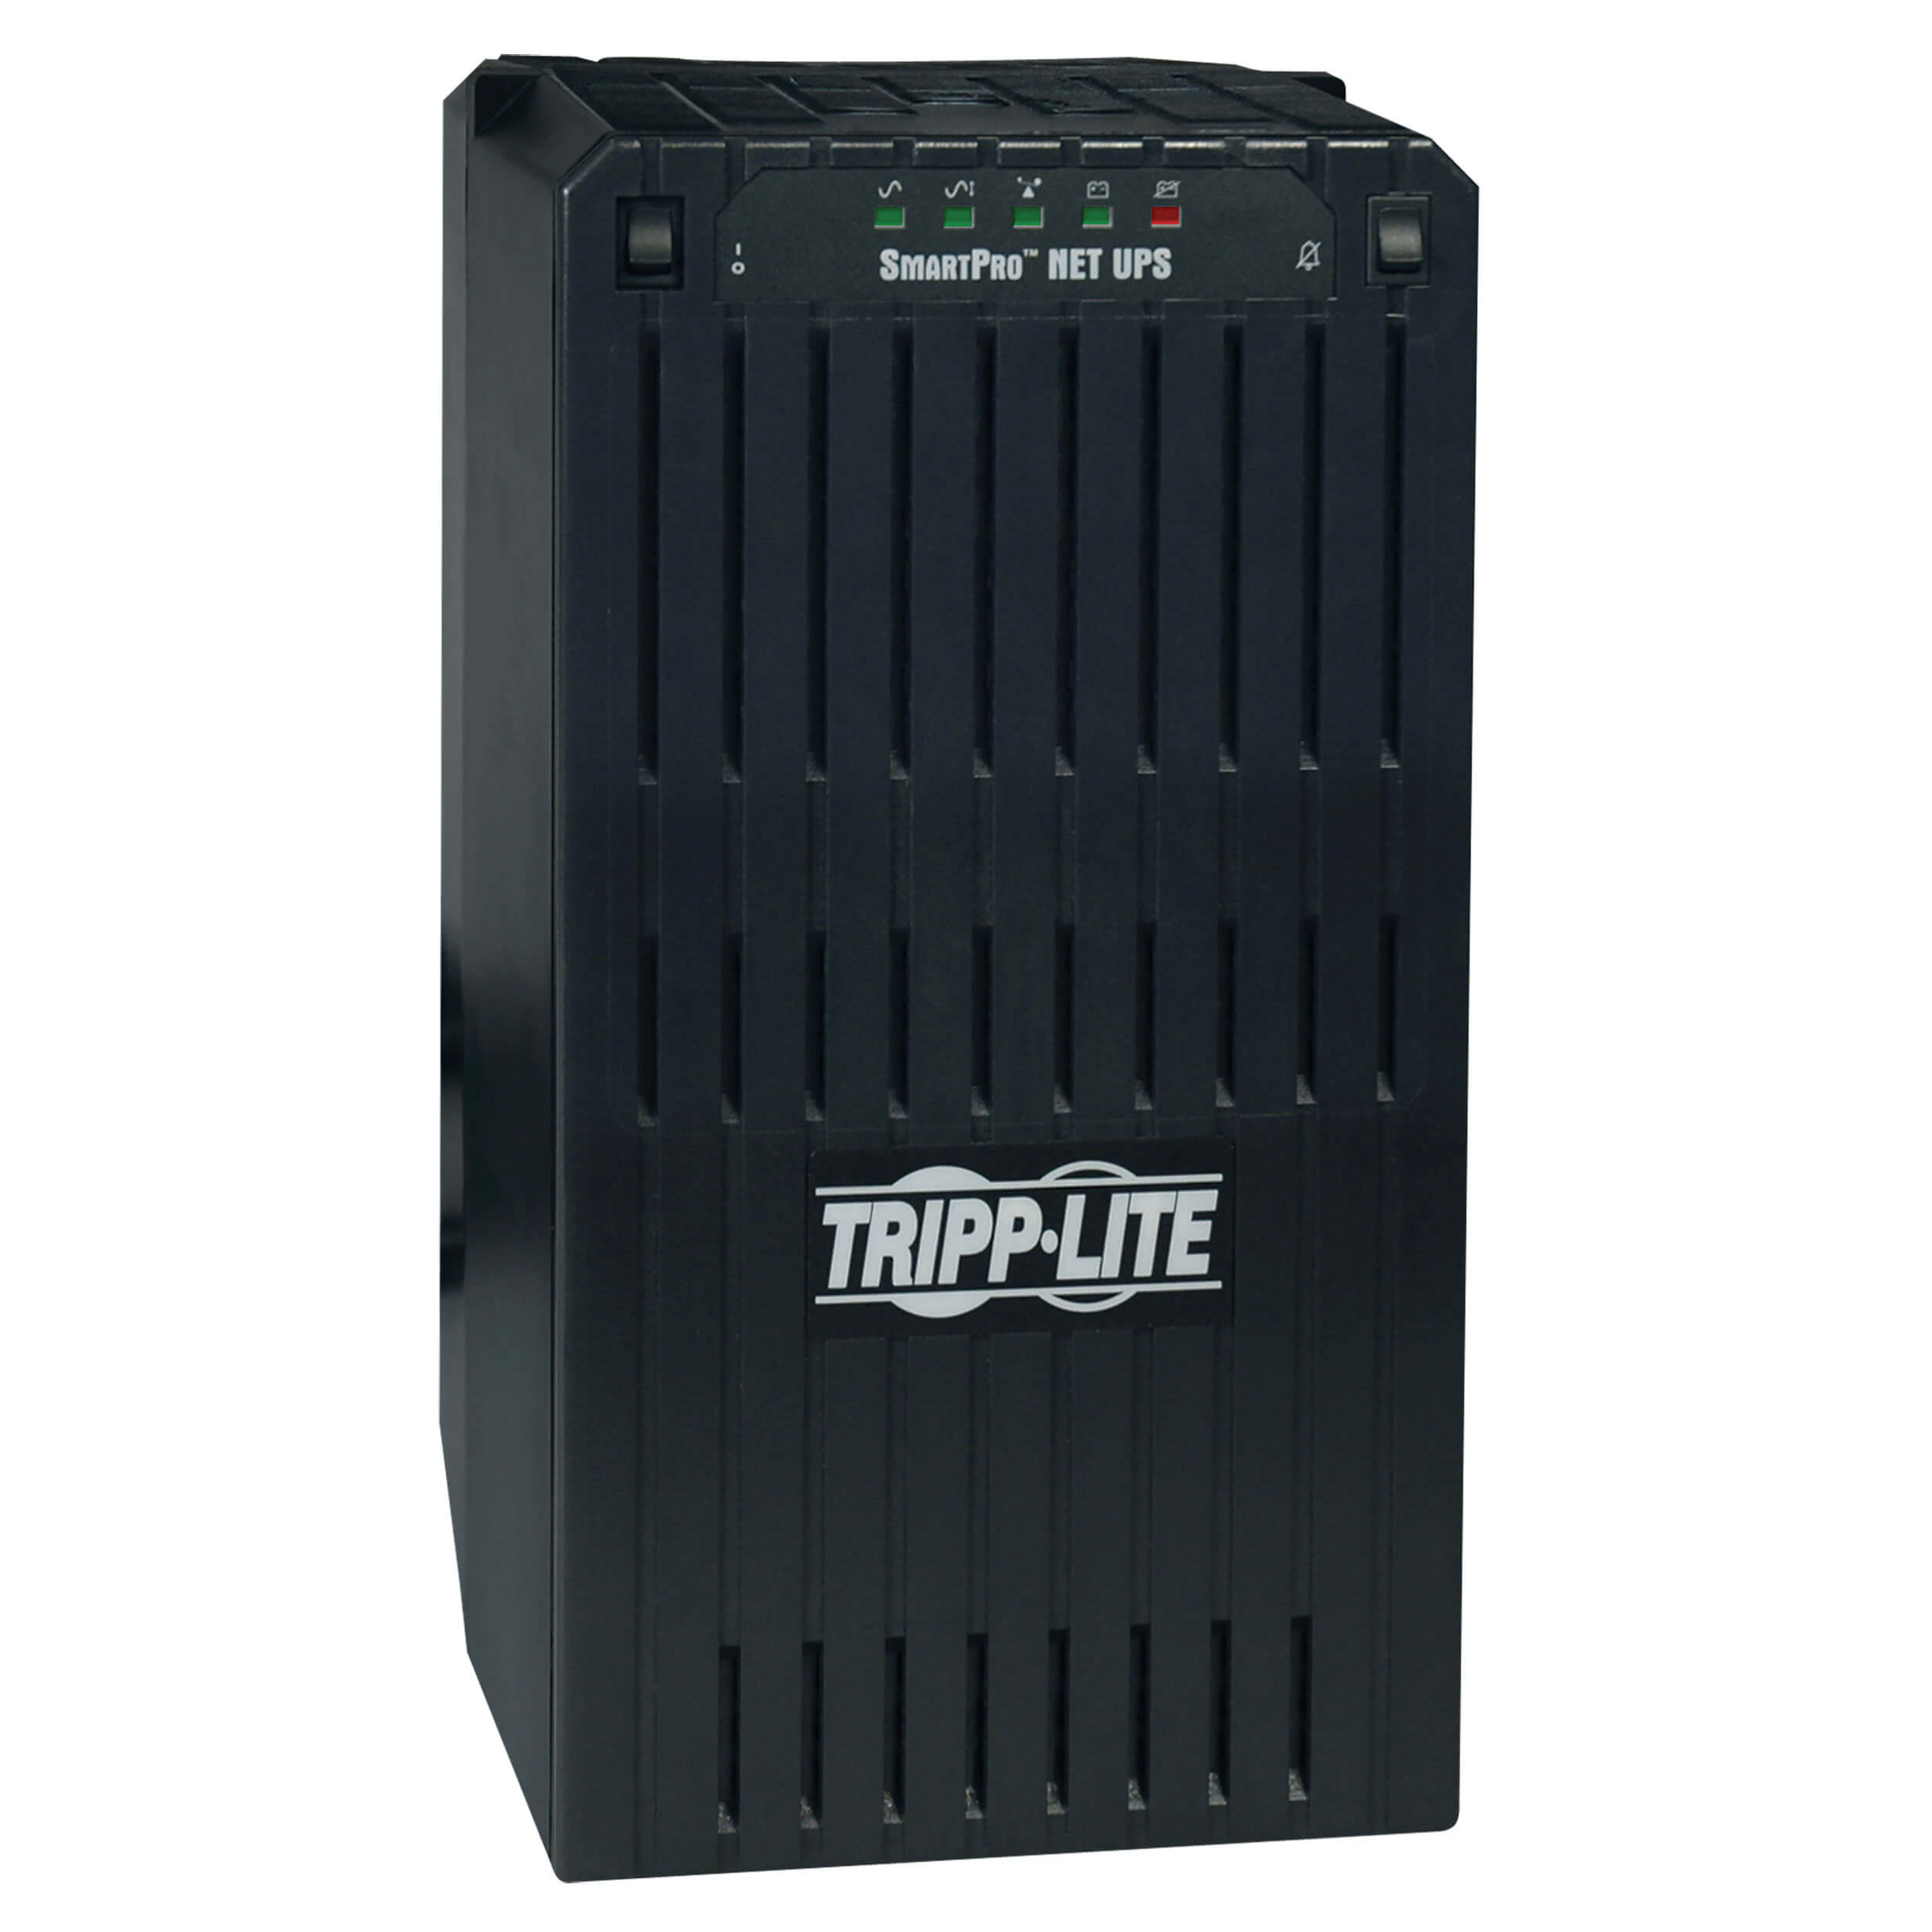 Tripp Lite SMART2200NET UPS No Break Interactivo SmartPro de 120V 2.2kVA 1.7kW, Torre, Operación Prolongada, 3 Puertos DB9